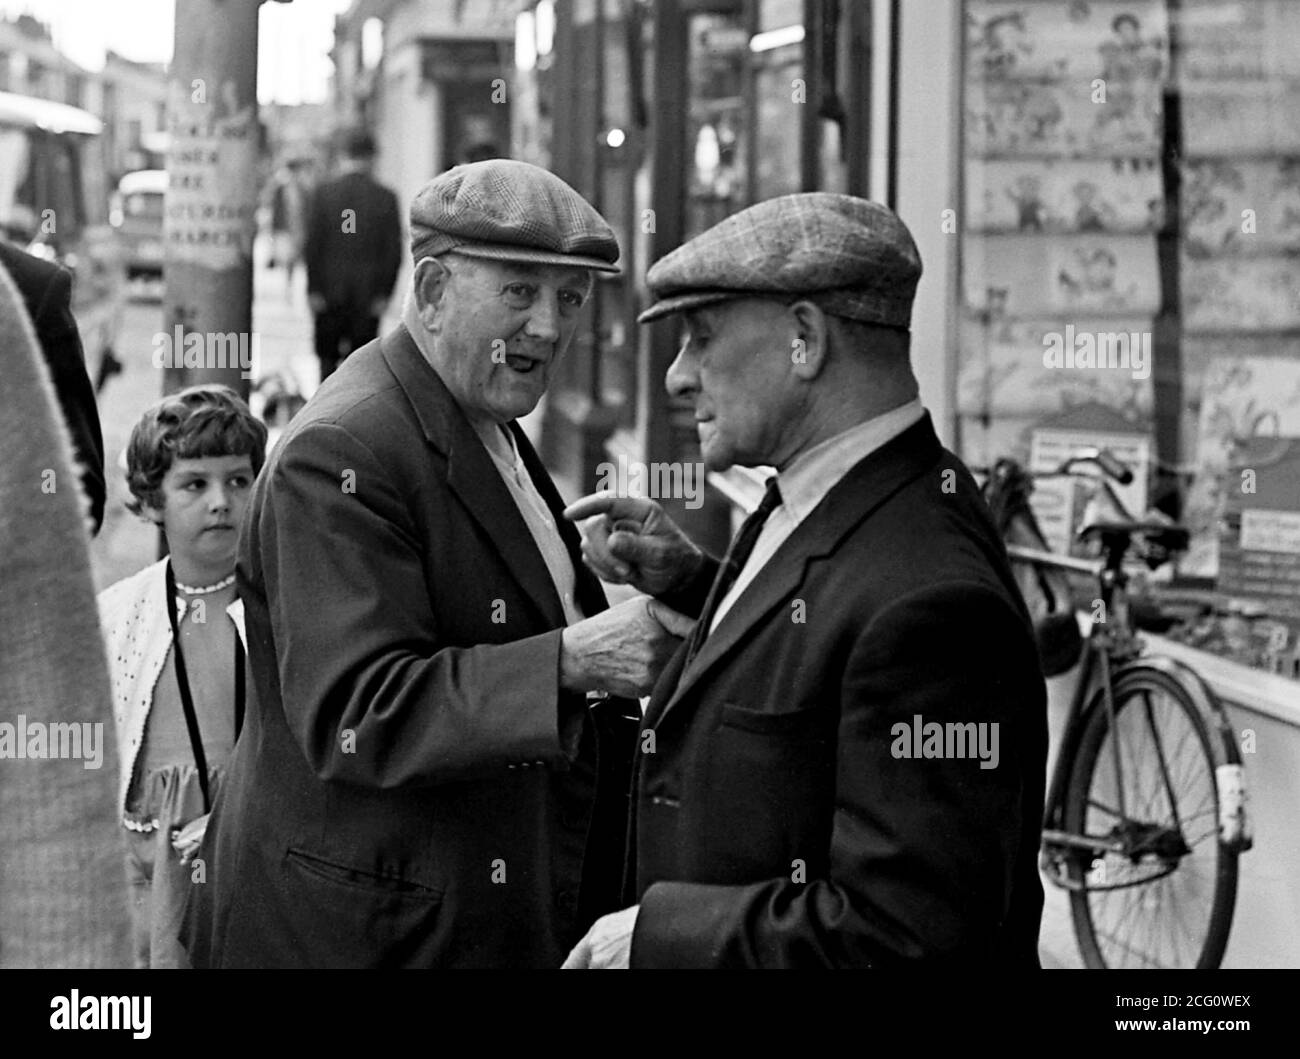 ajaxnetphoto-1968-portsmouth-england-finger-pointing-two-older-gentlemen-exchange-views-on-lak...jpg